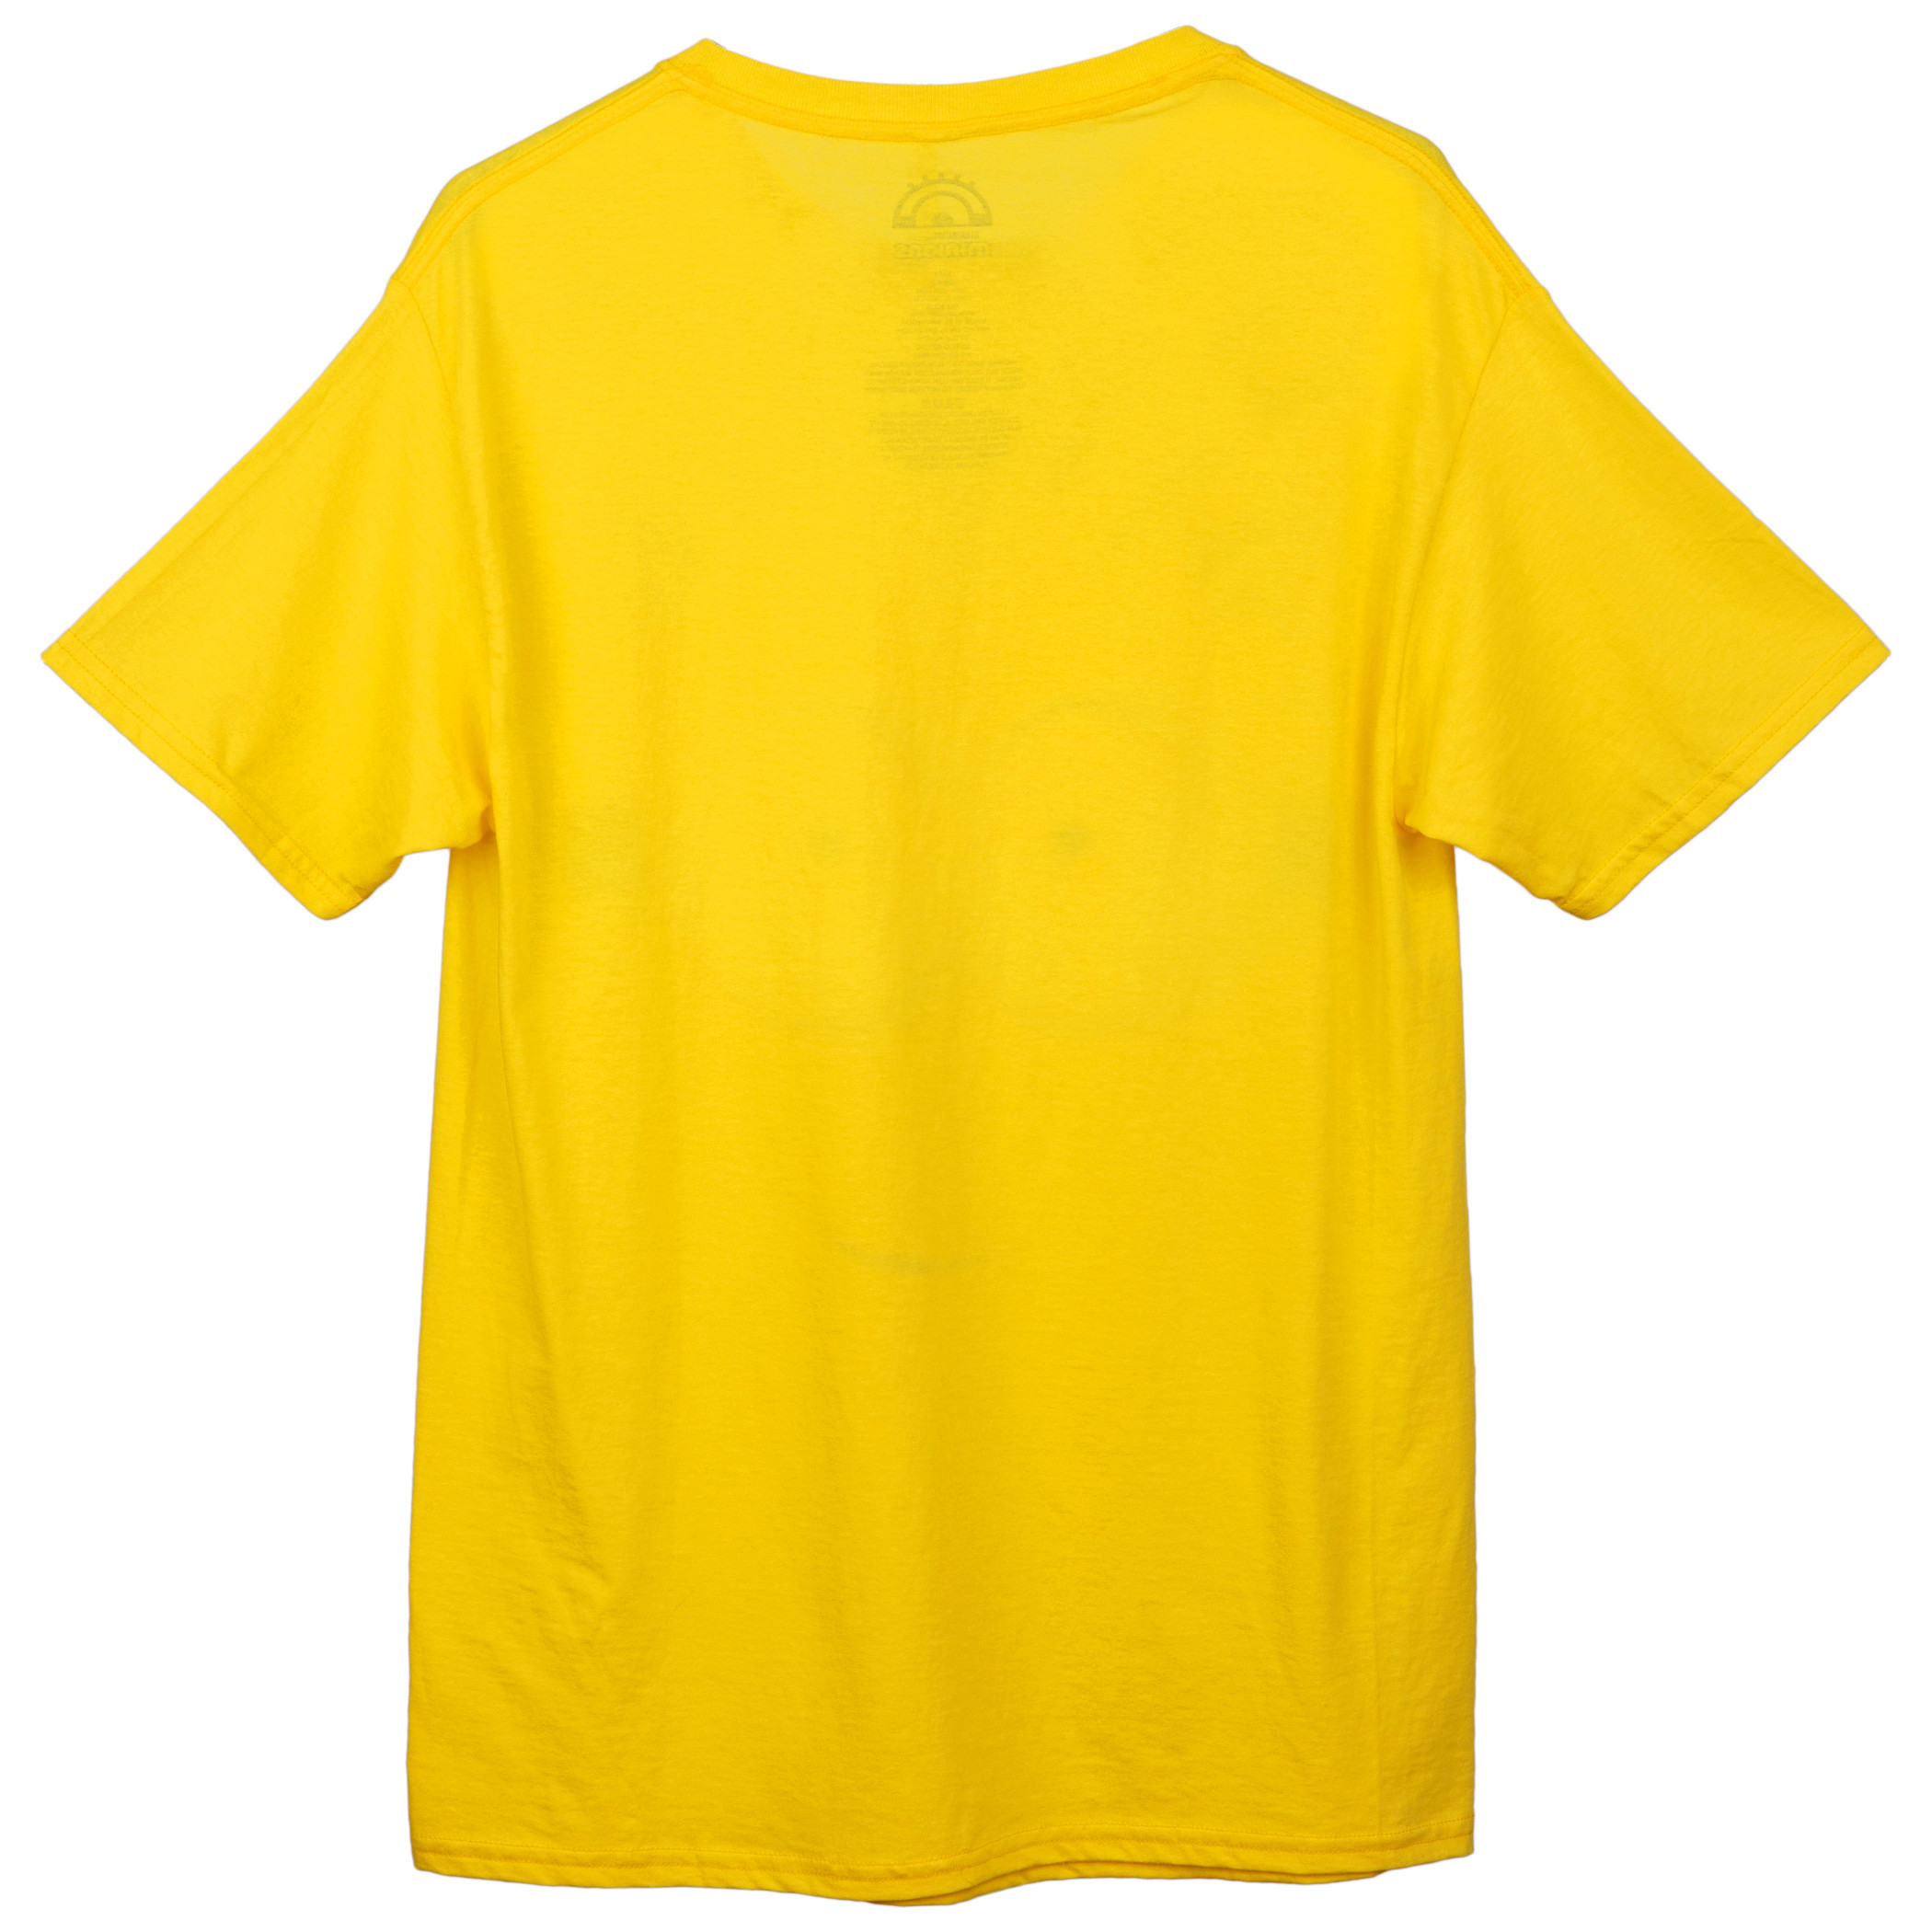 Minions Smug Face T-Shirt